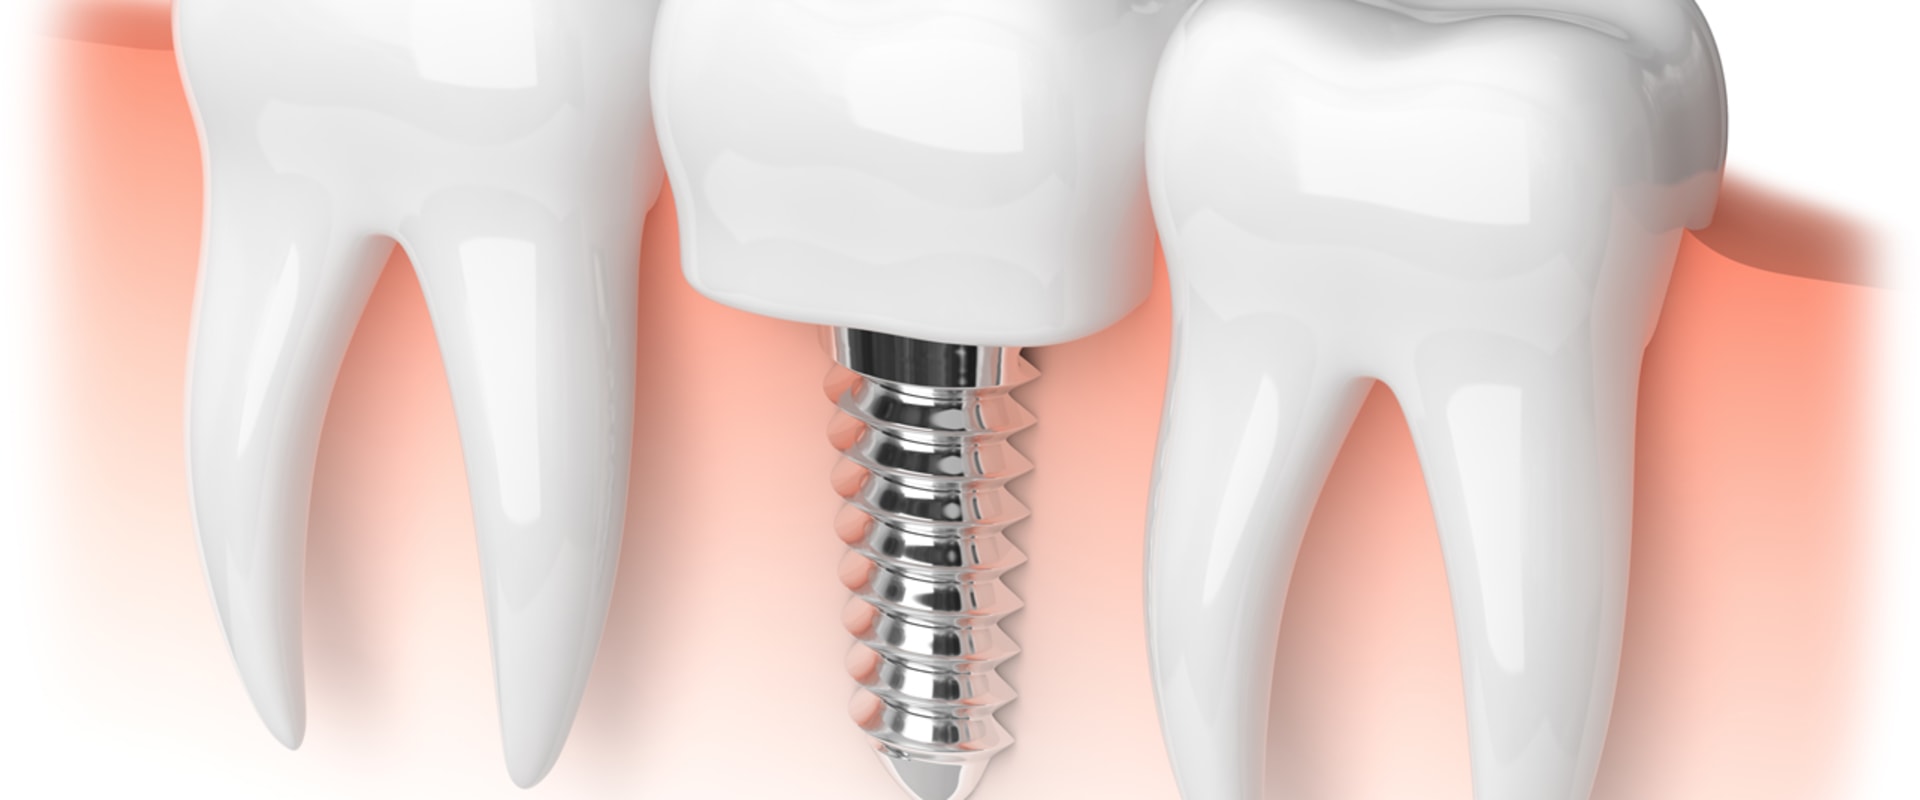 How dental implants work?